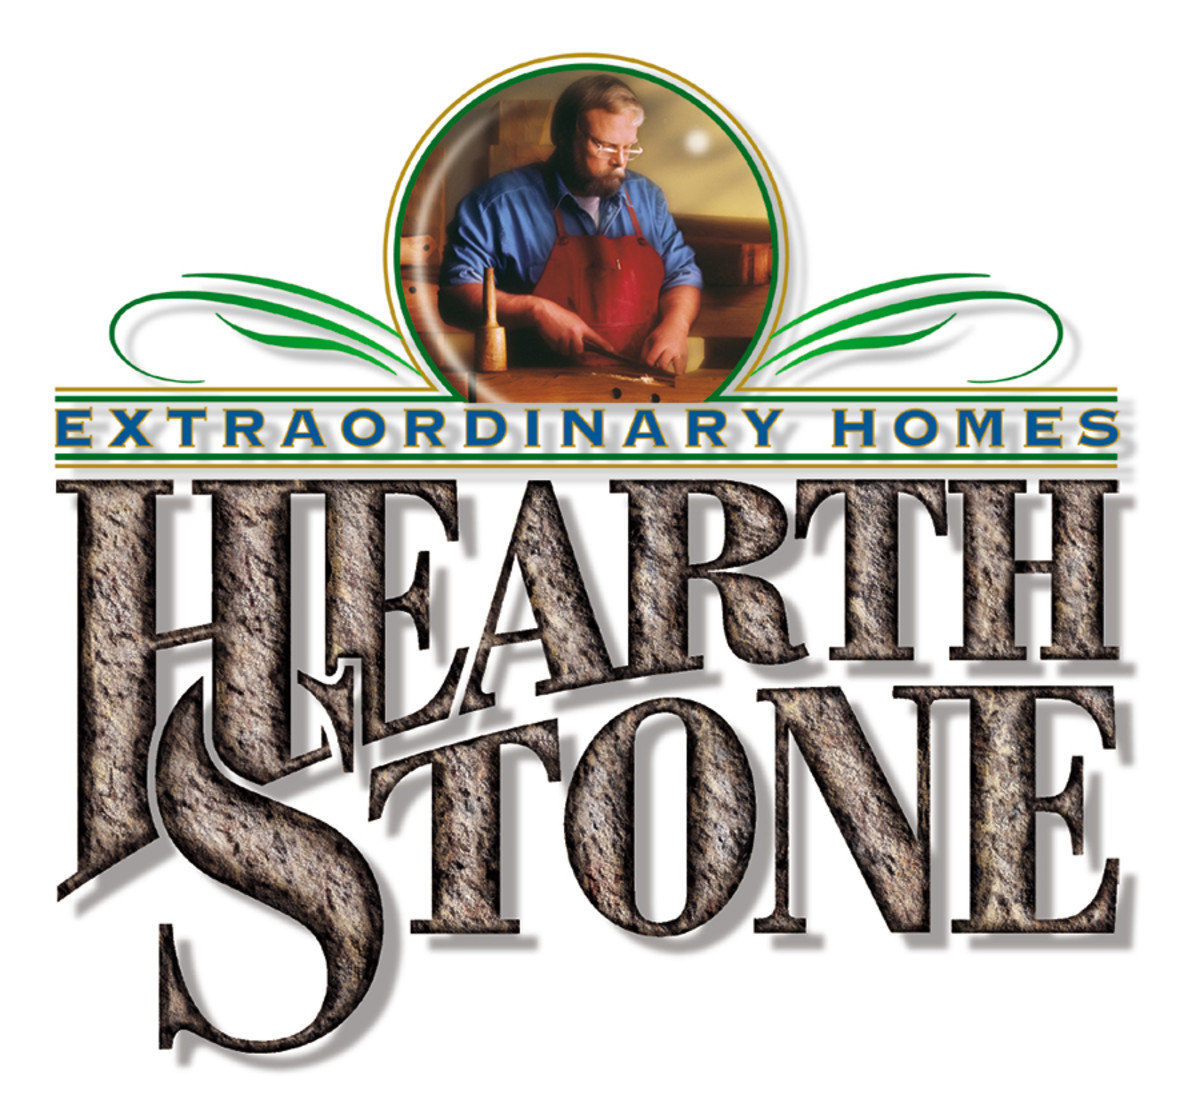 hearthstone-logo